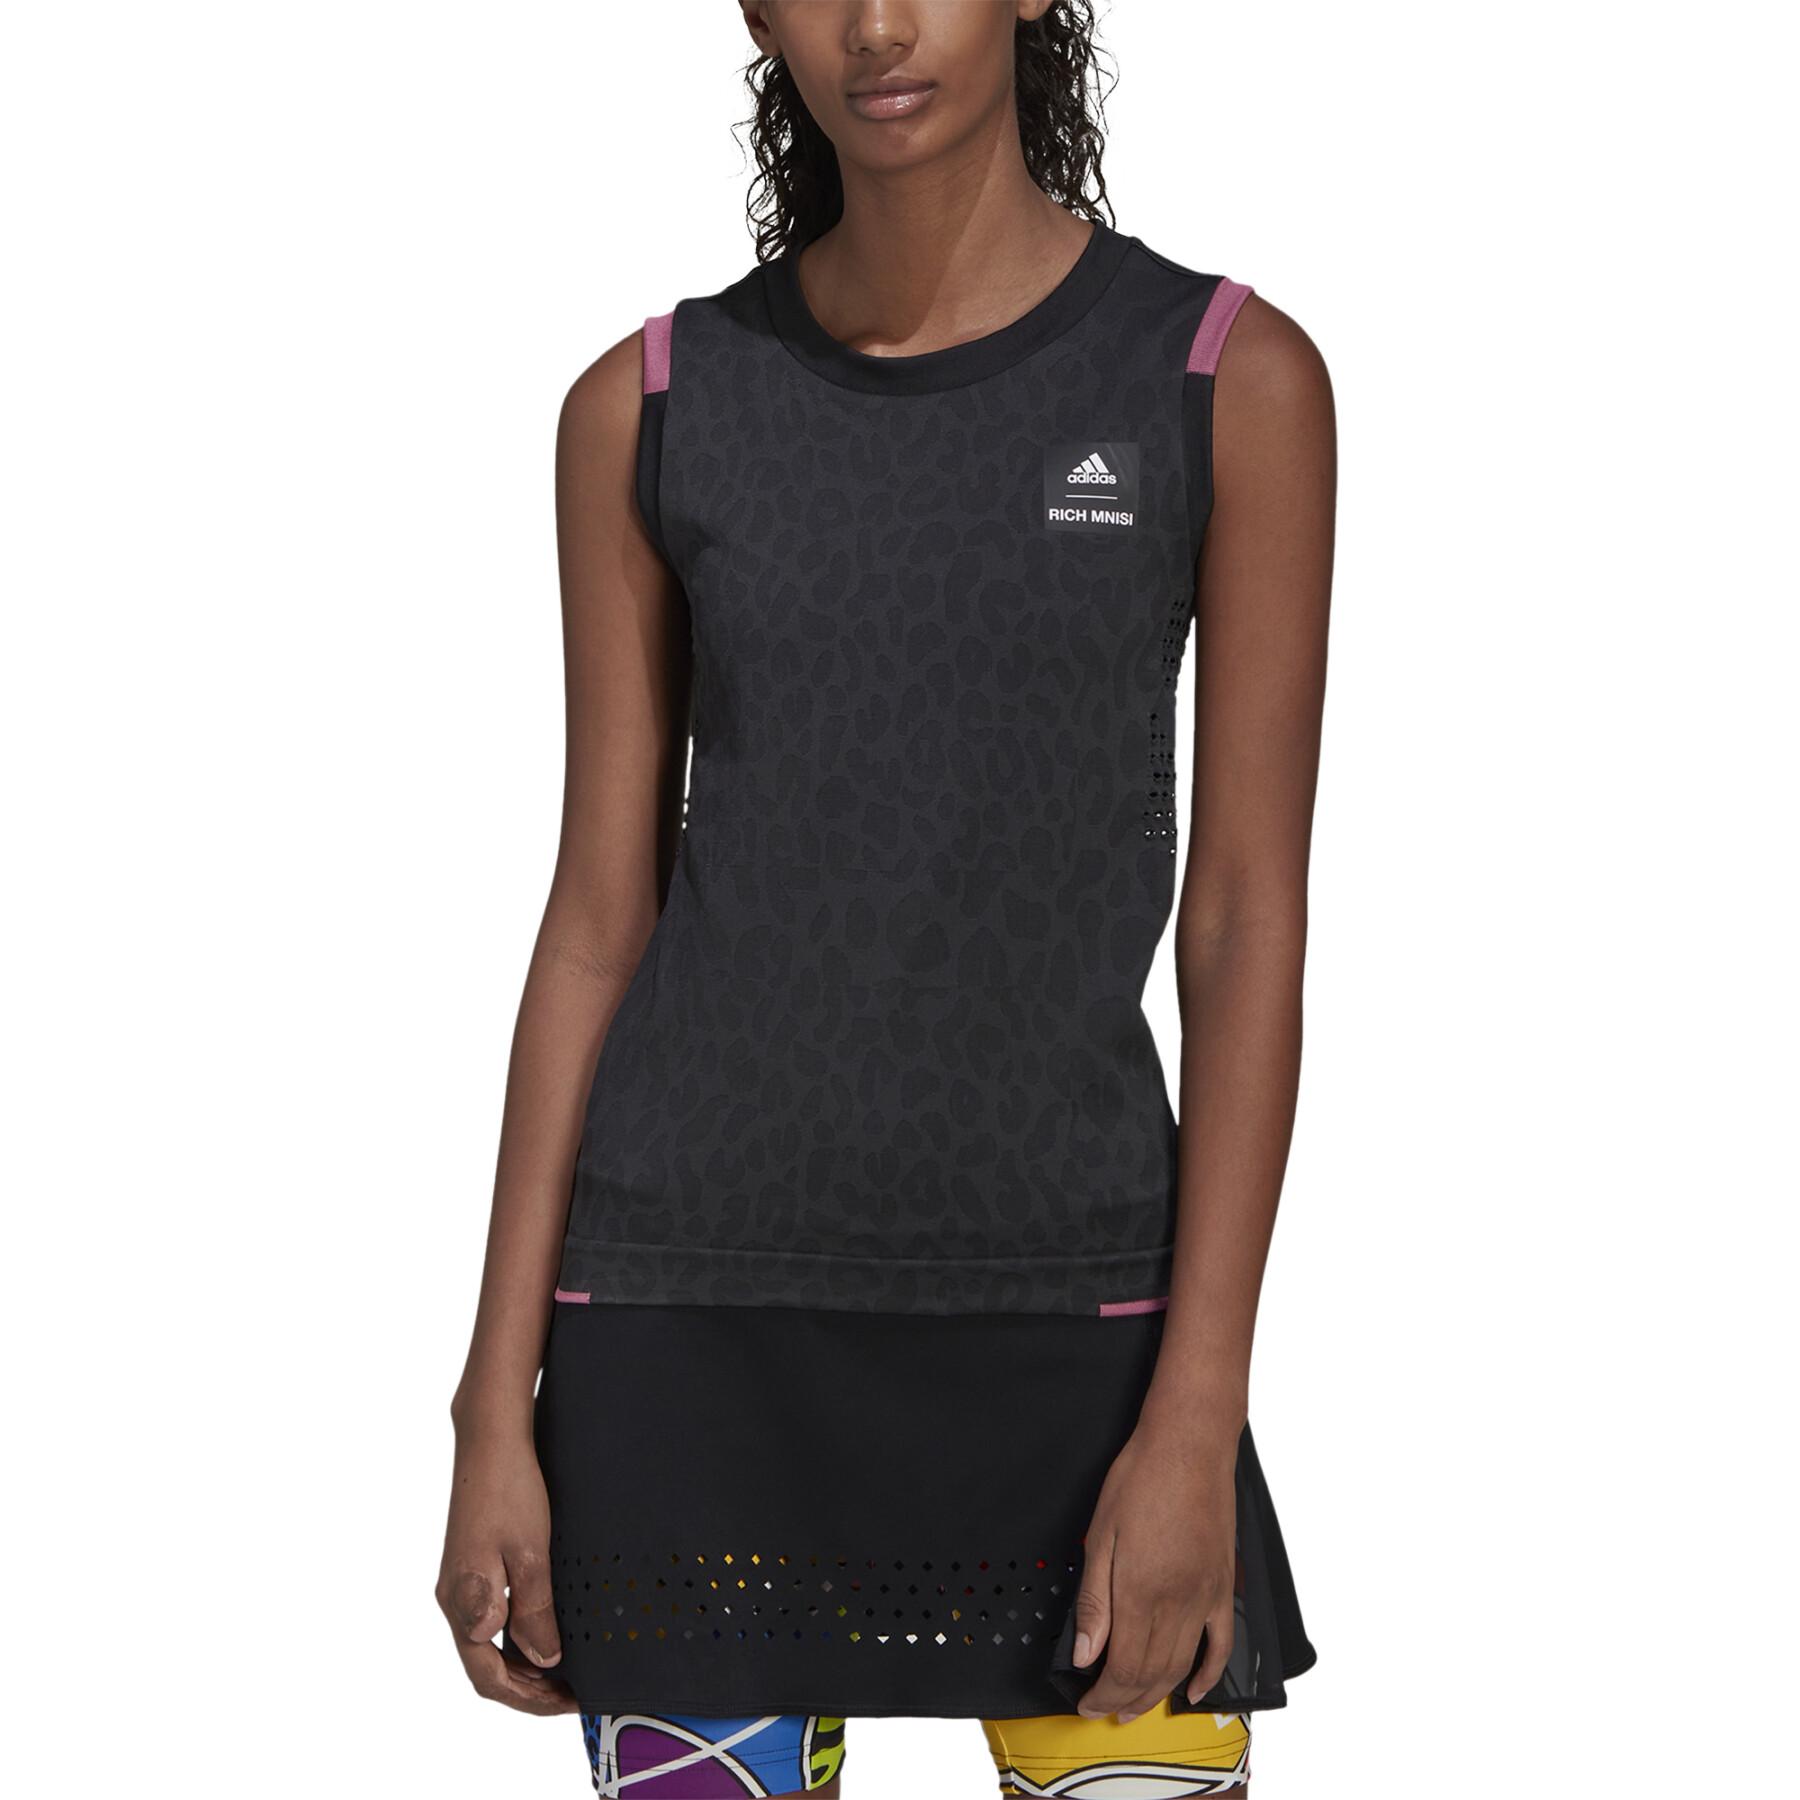 Women's swimsuit adidas Tennis Rich Mnisi Primeknit